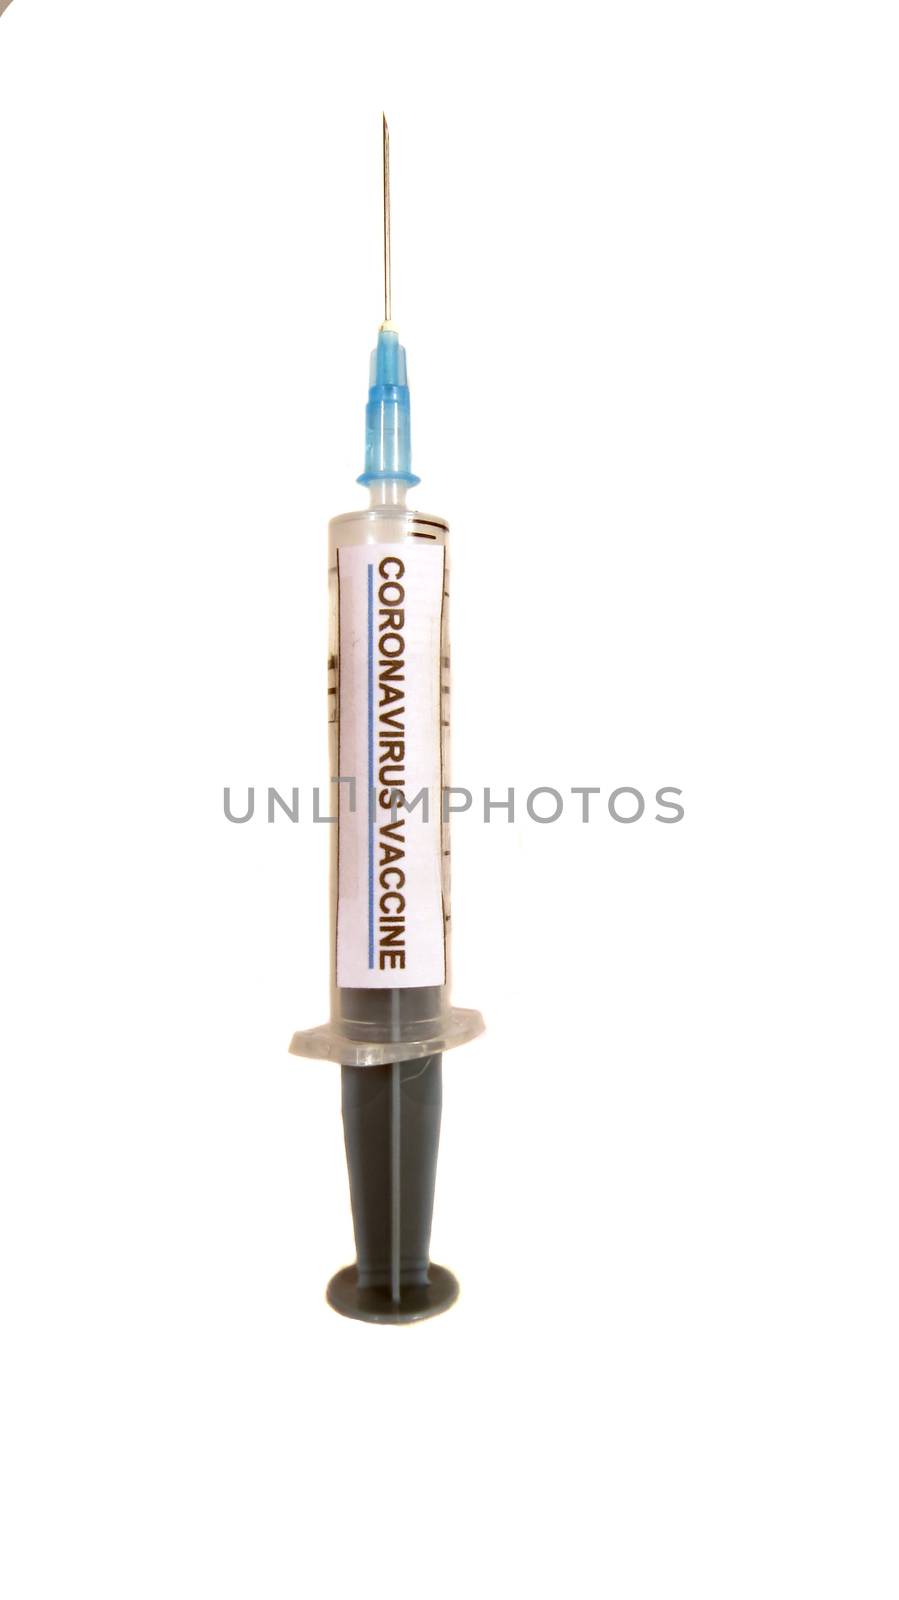 Coronavirus Injection Syringe by thefinalmiracle